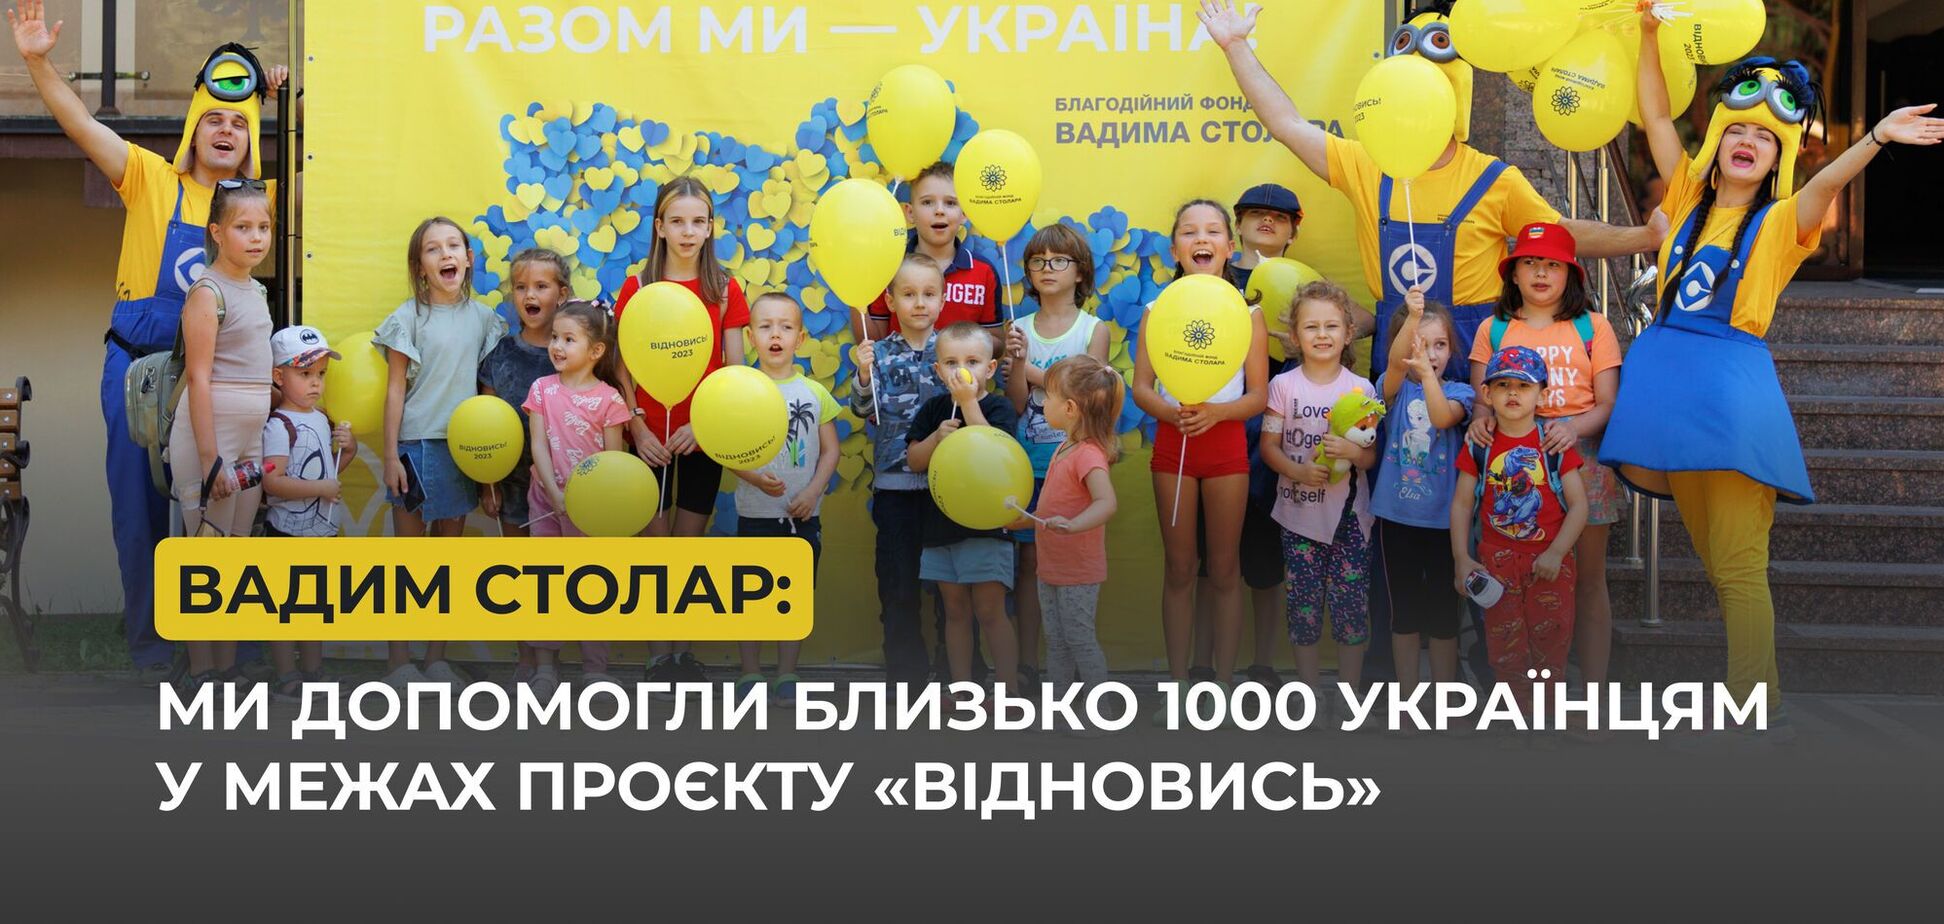 Проект по психологической реабилитации 'Відновись' охватил почти тысячу украинцев, – Столар